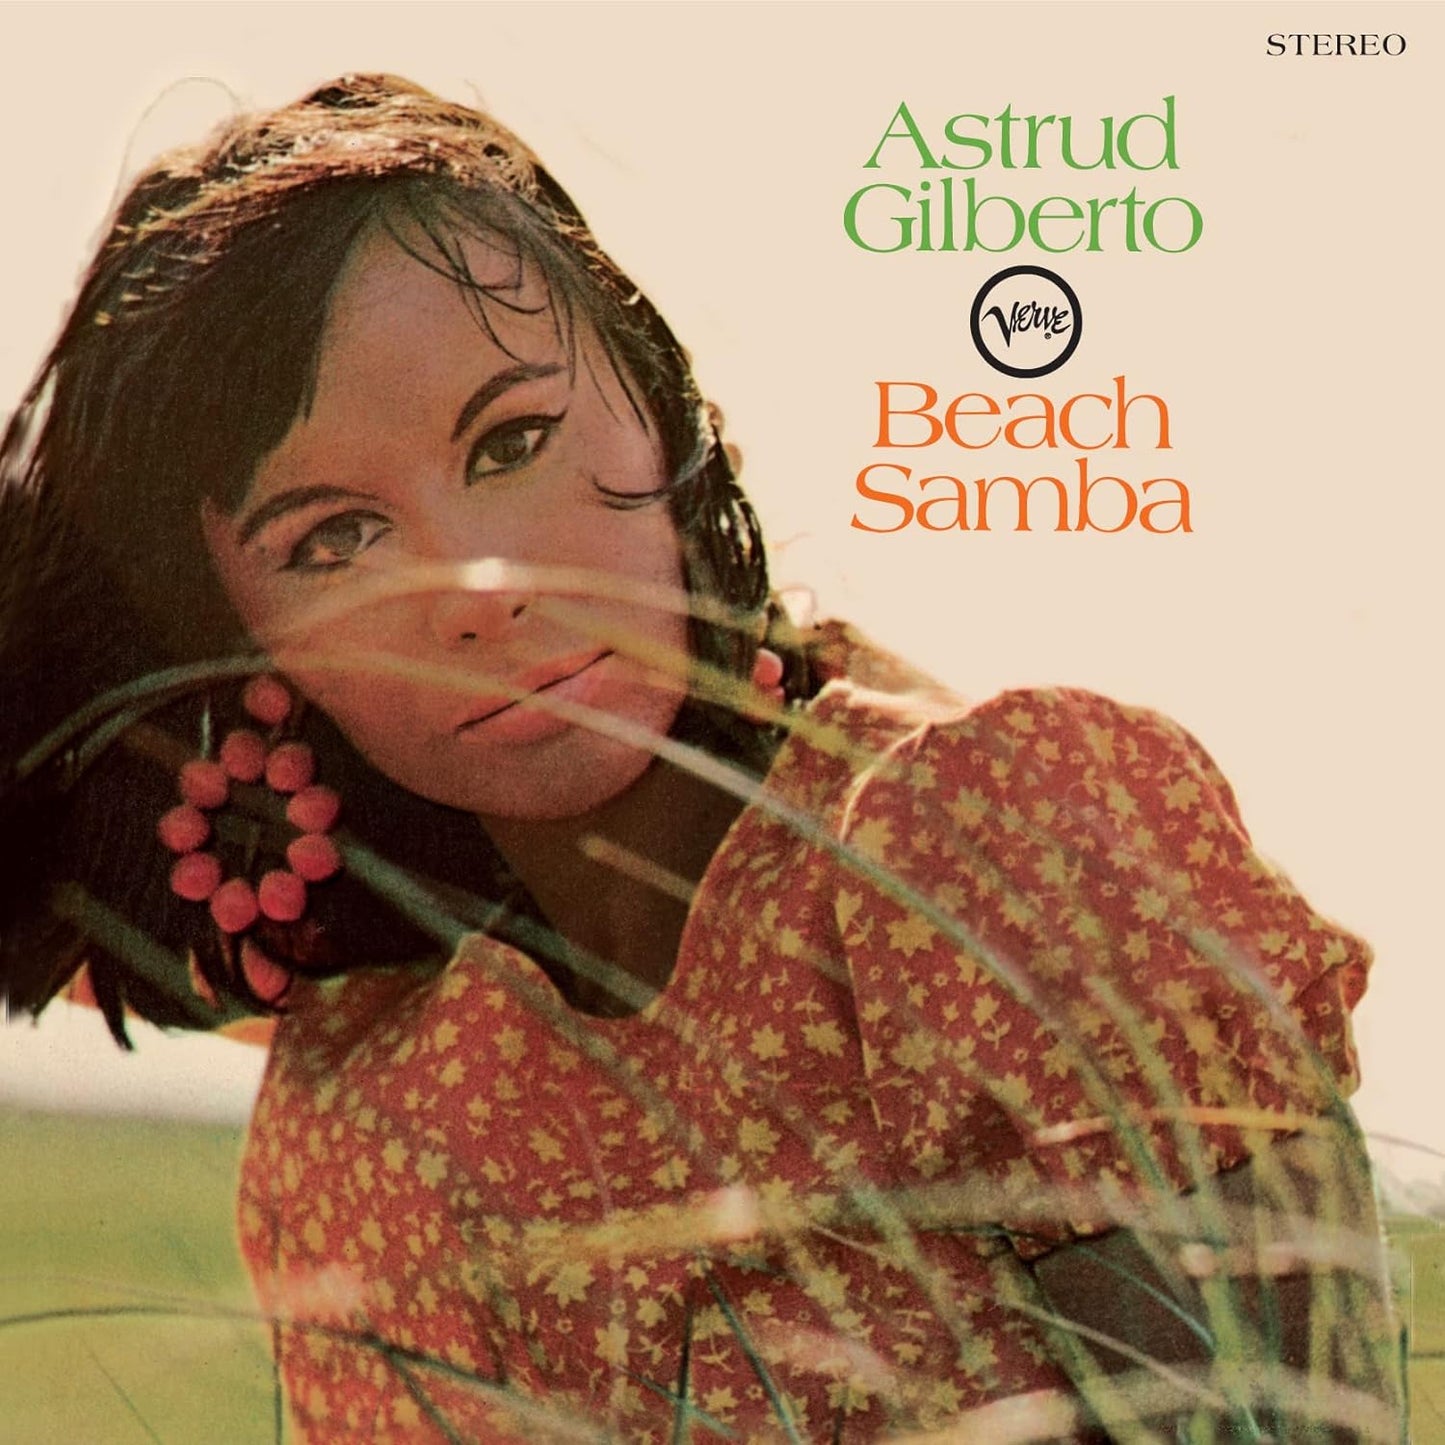 Astrud Gilberto - Beach Samba (Vinile 180gr.)